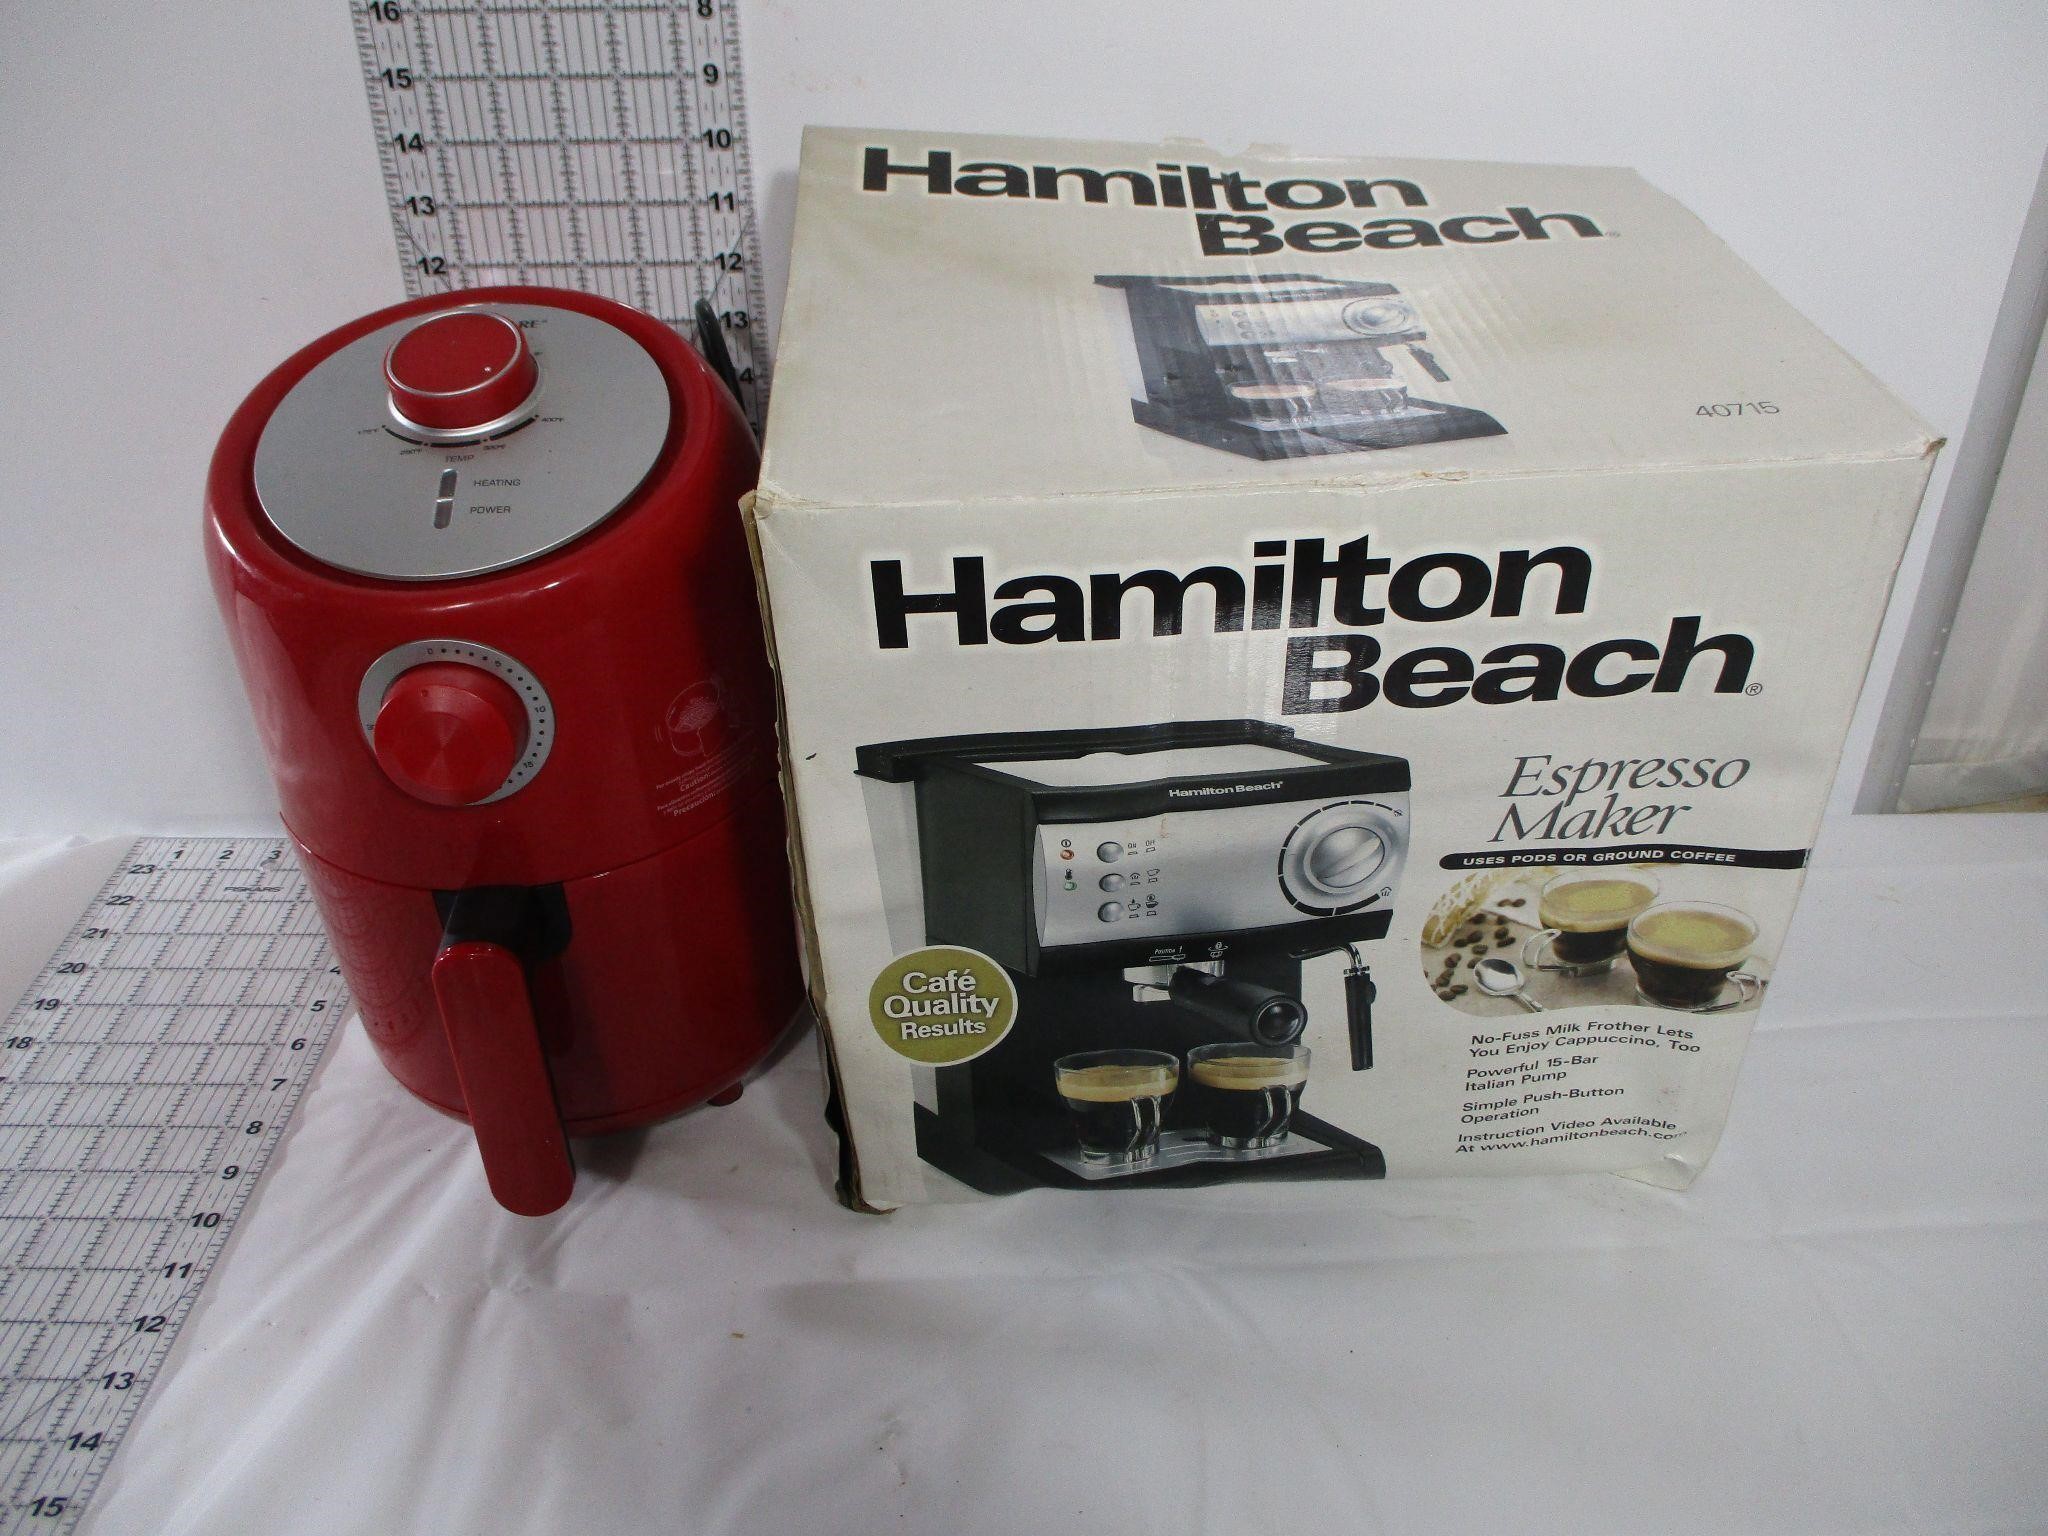 Hamilton Beach Espresso Machine and Air Fryer